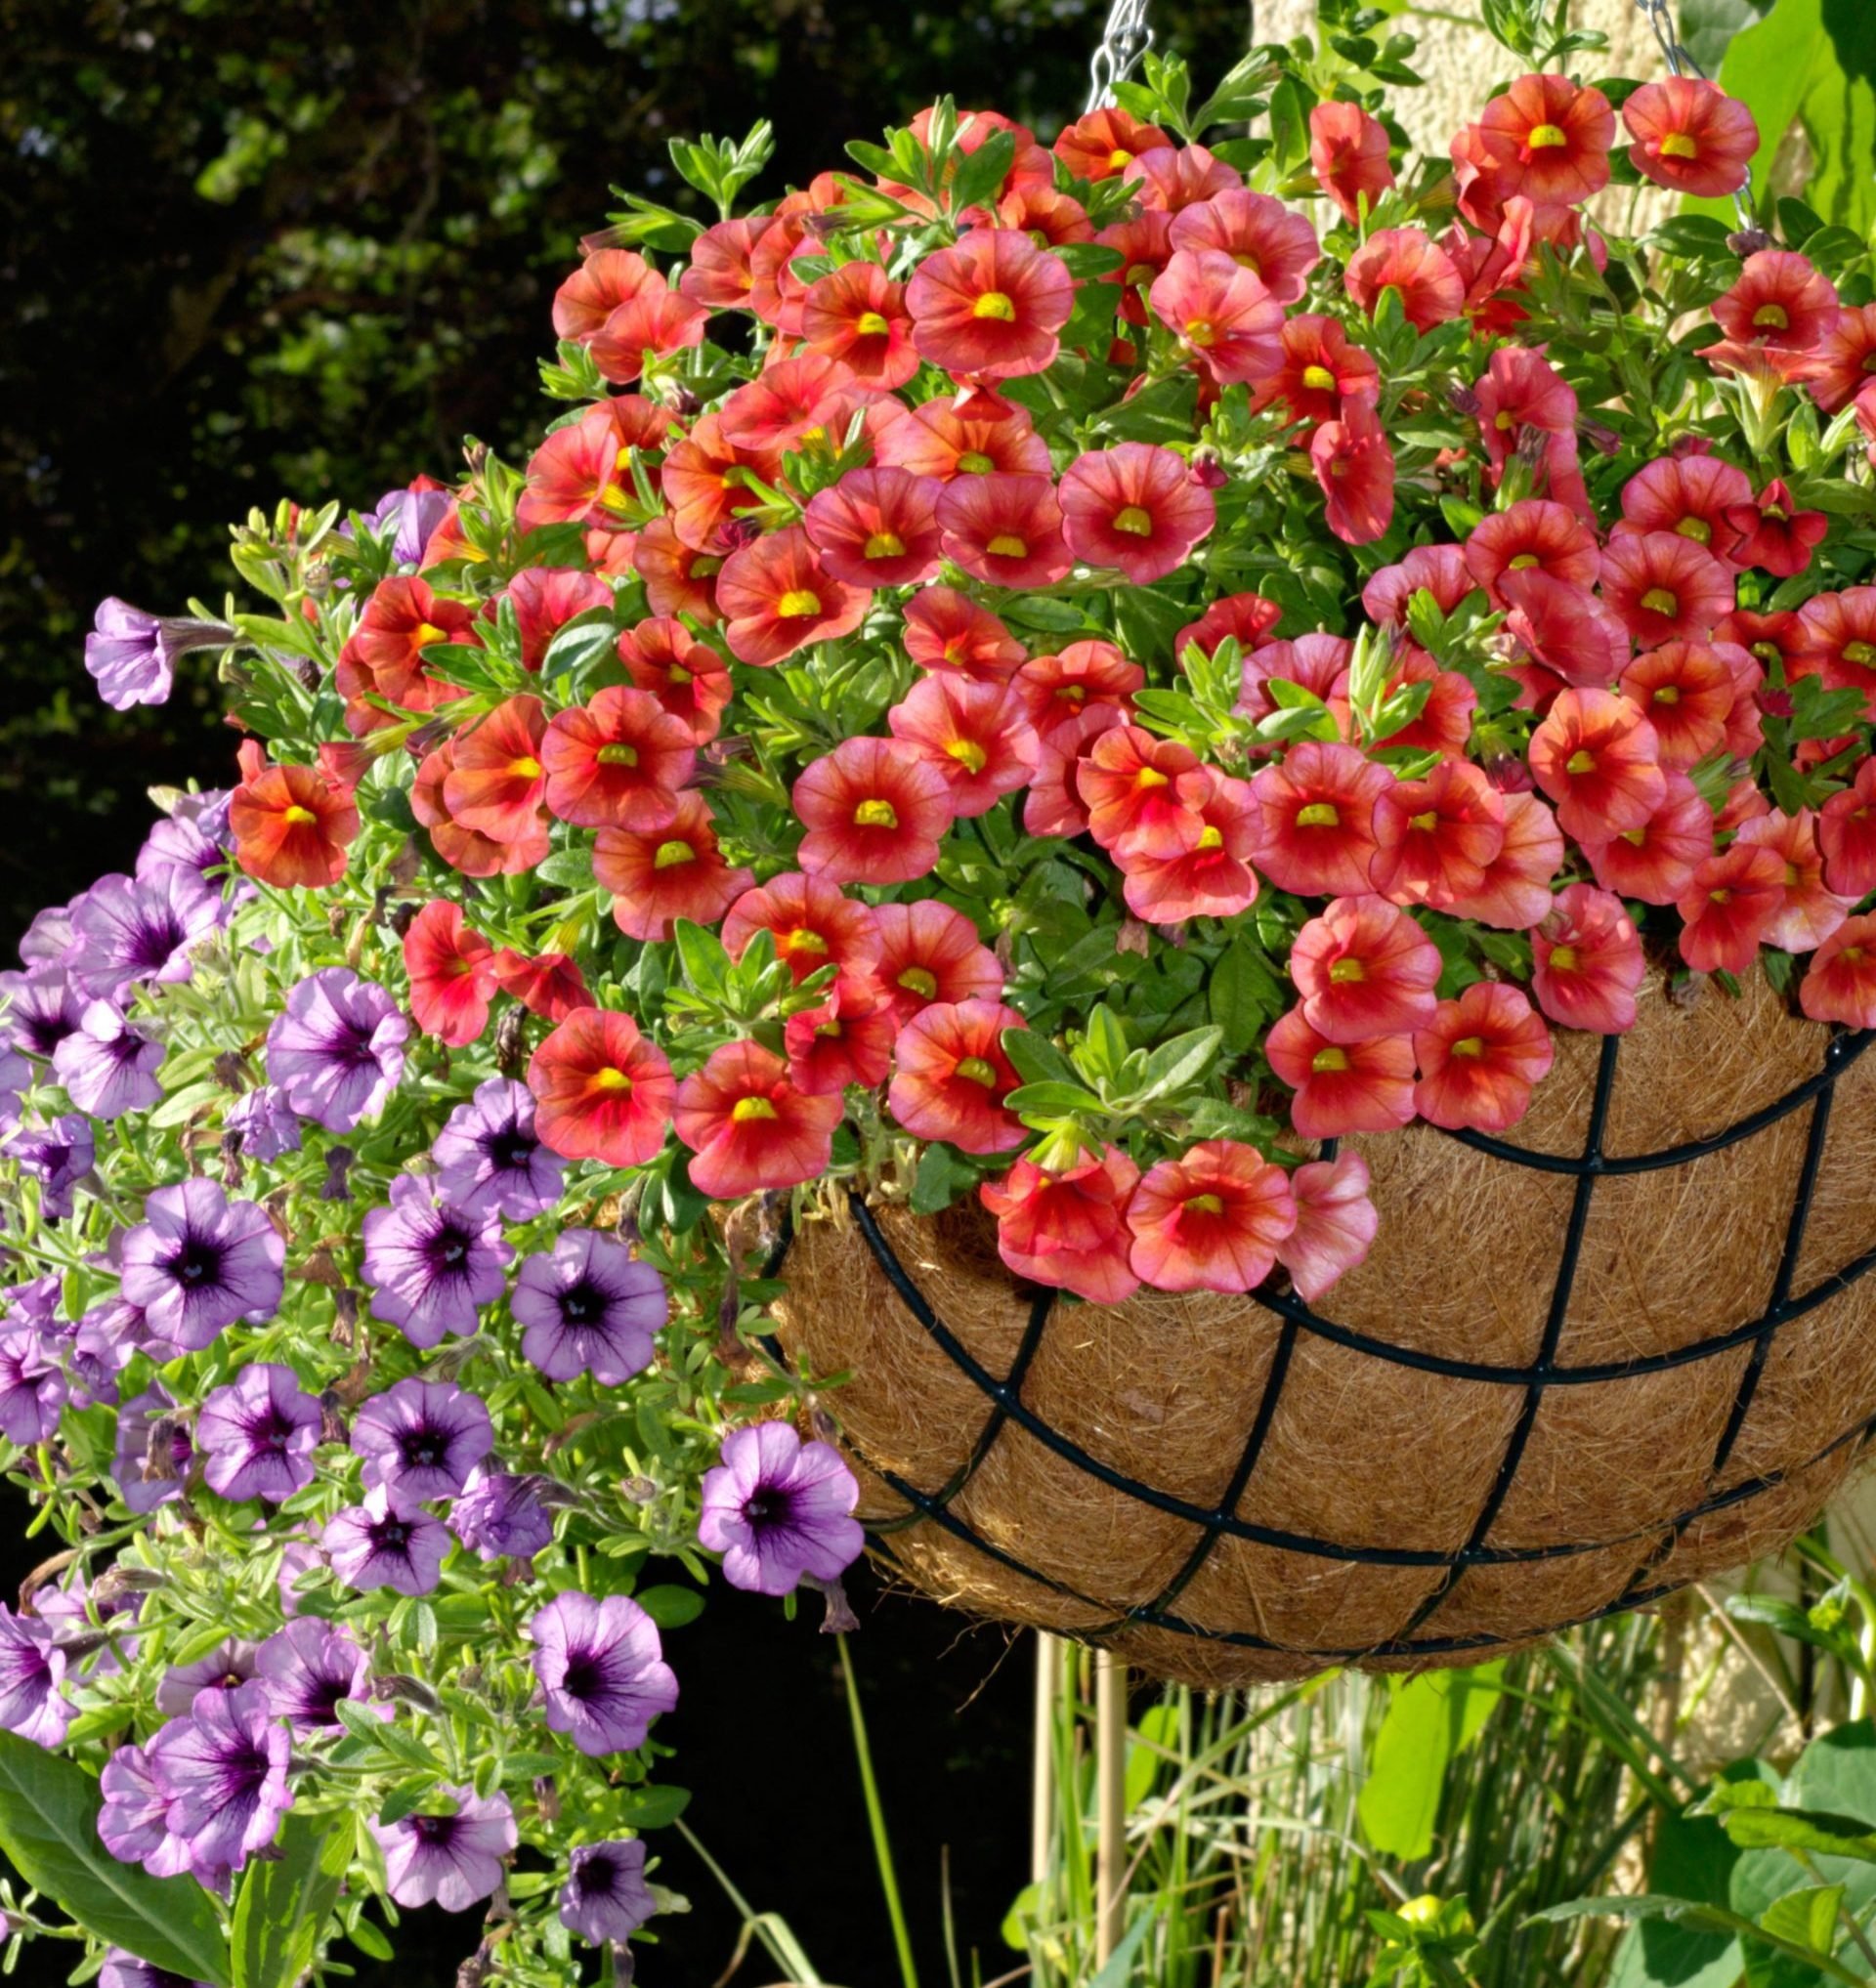 Plant a Hanging Flower Basket in 5 Easy Steps